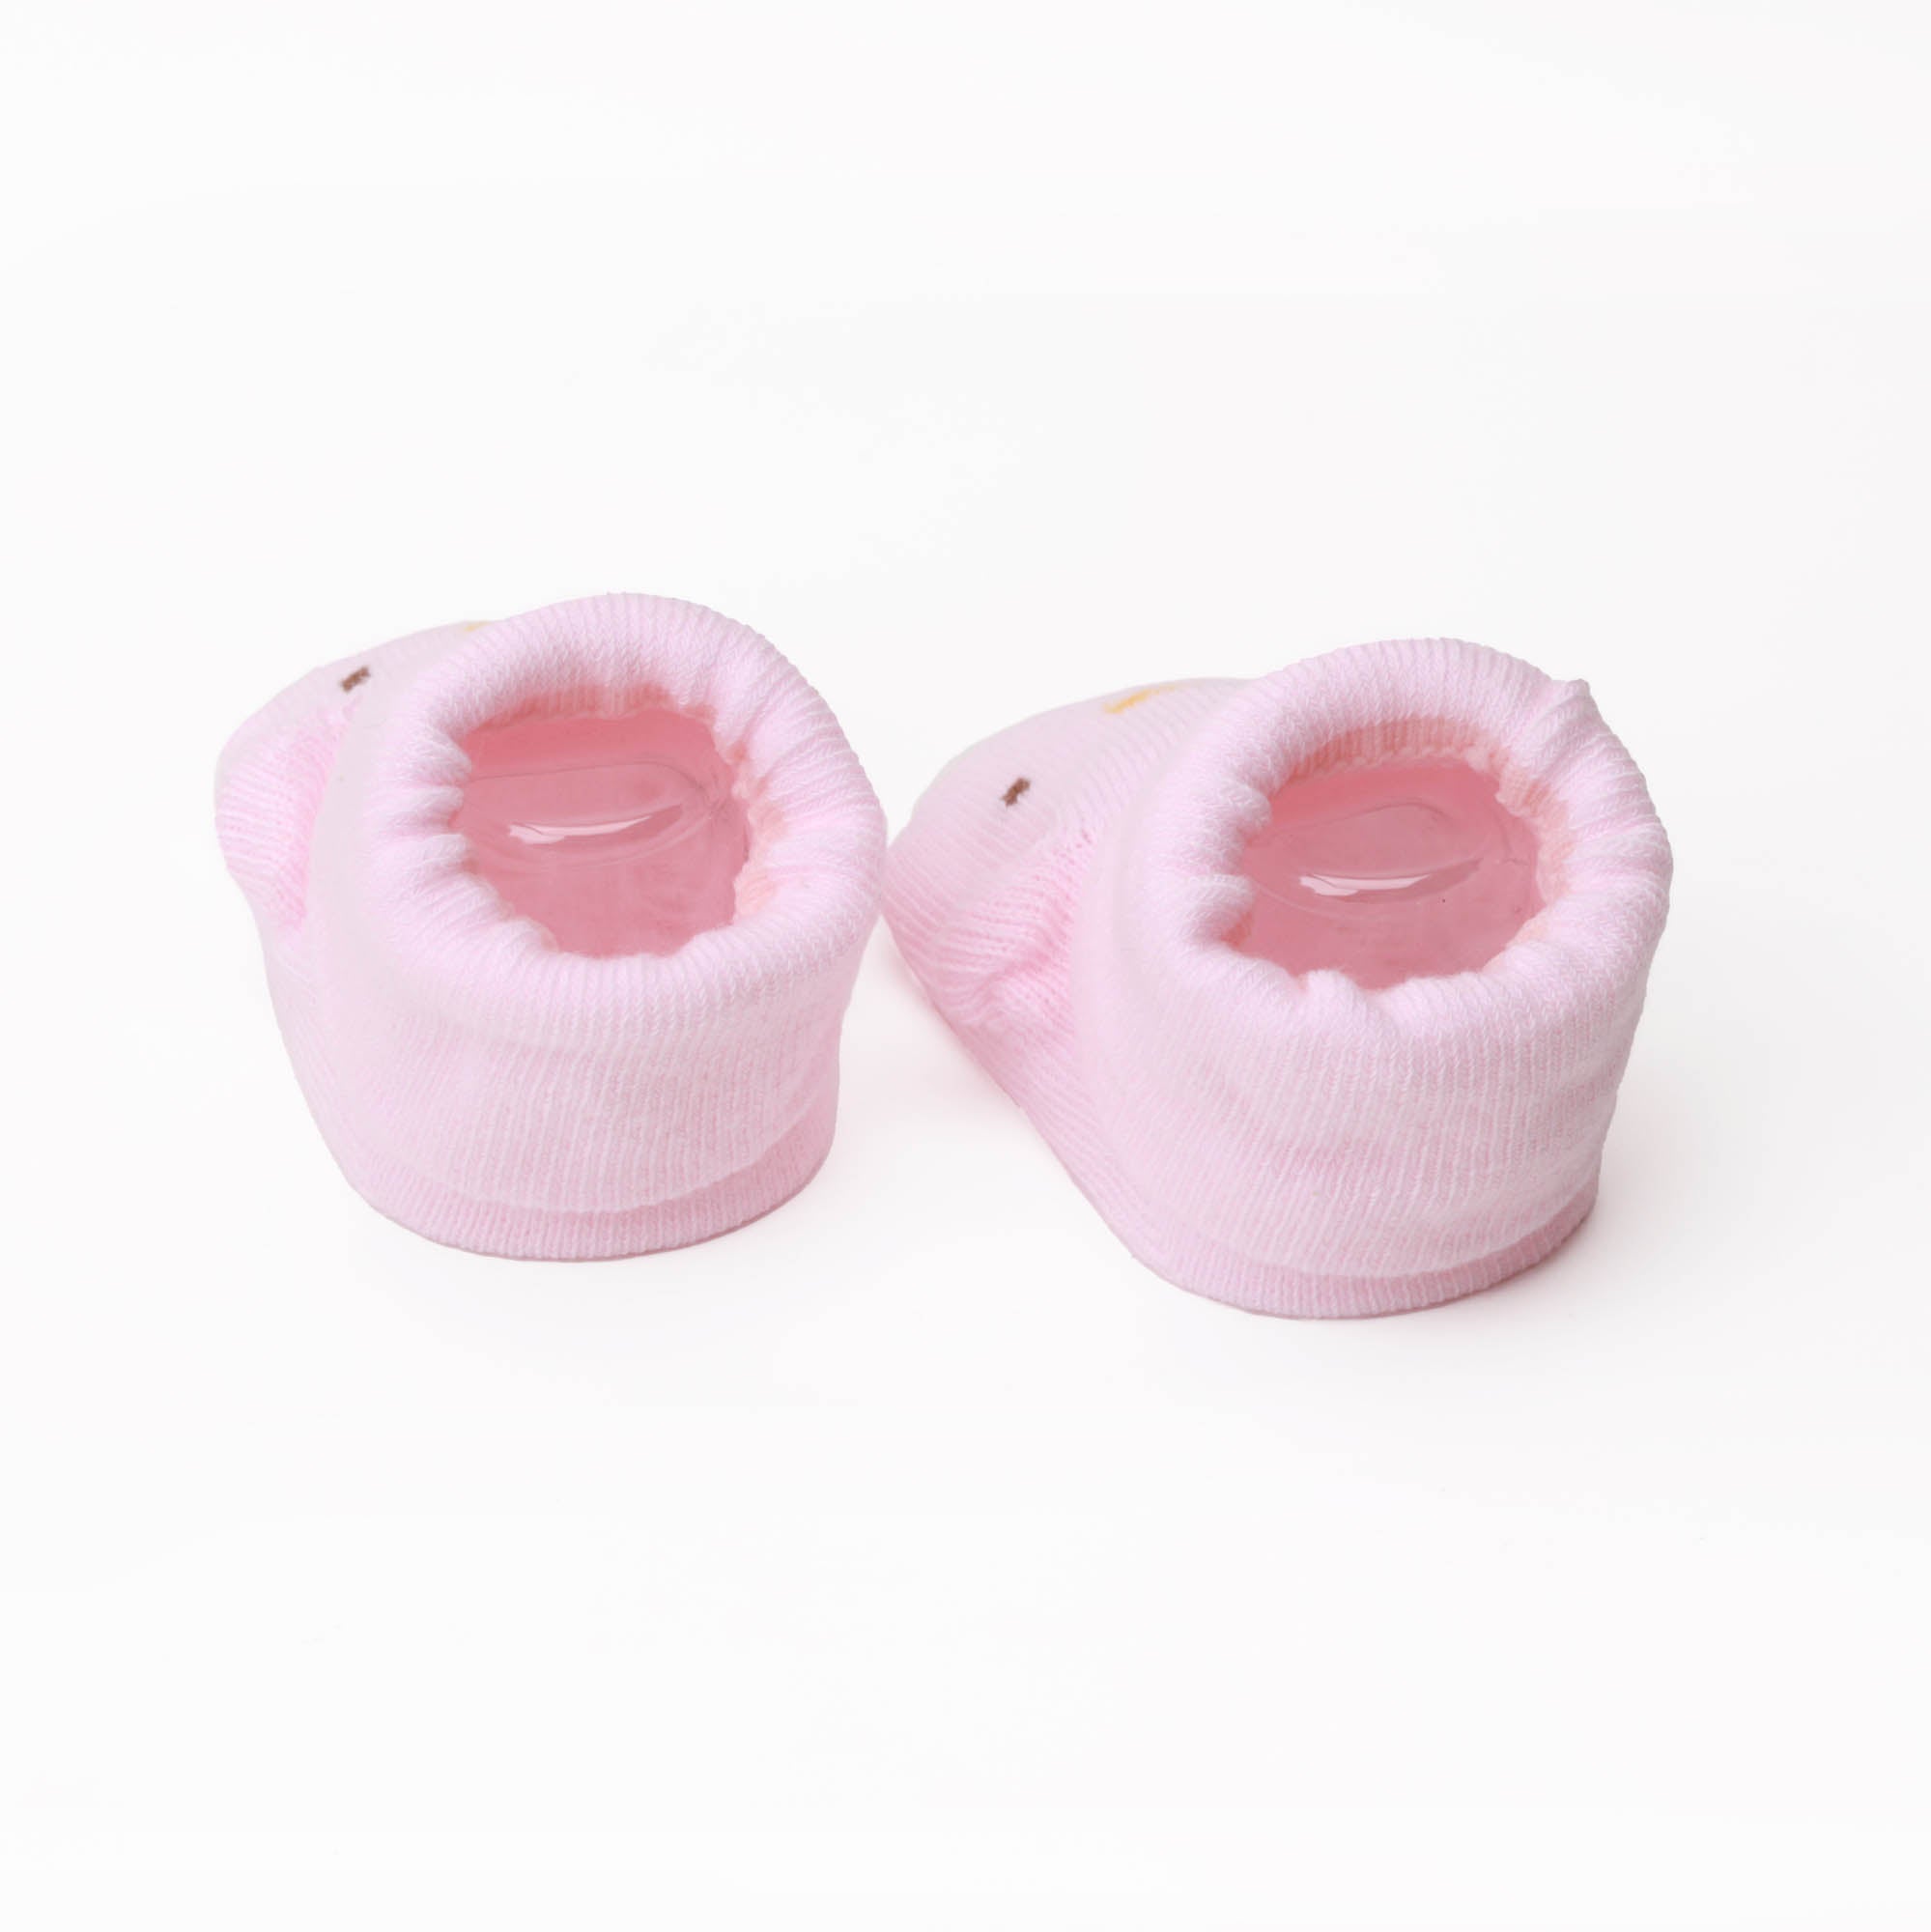 Kicks & Crawl- Lightweight Baby Socks Pink & Yellow - 2 Pack